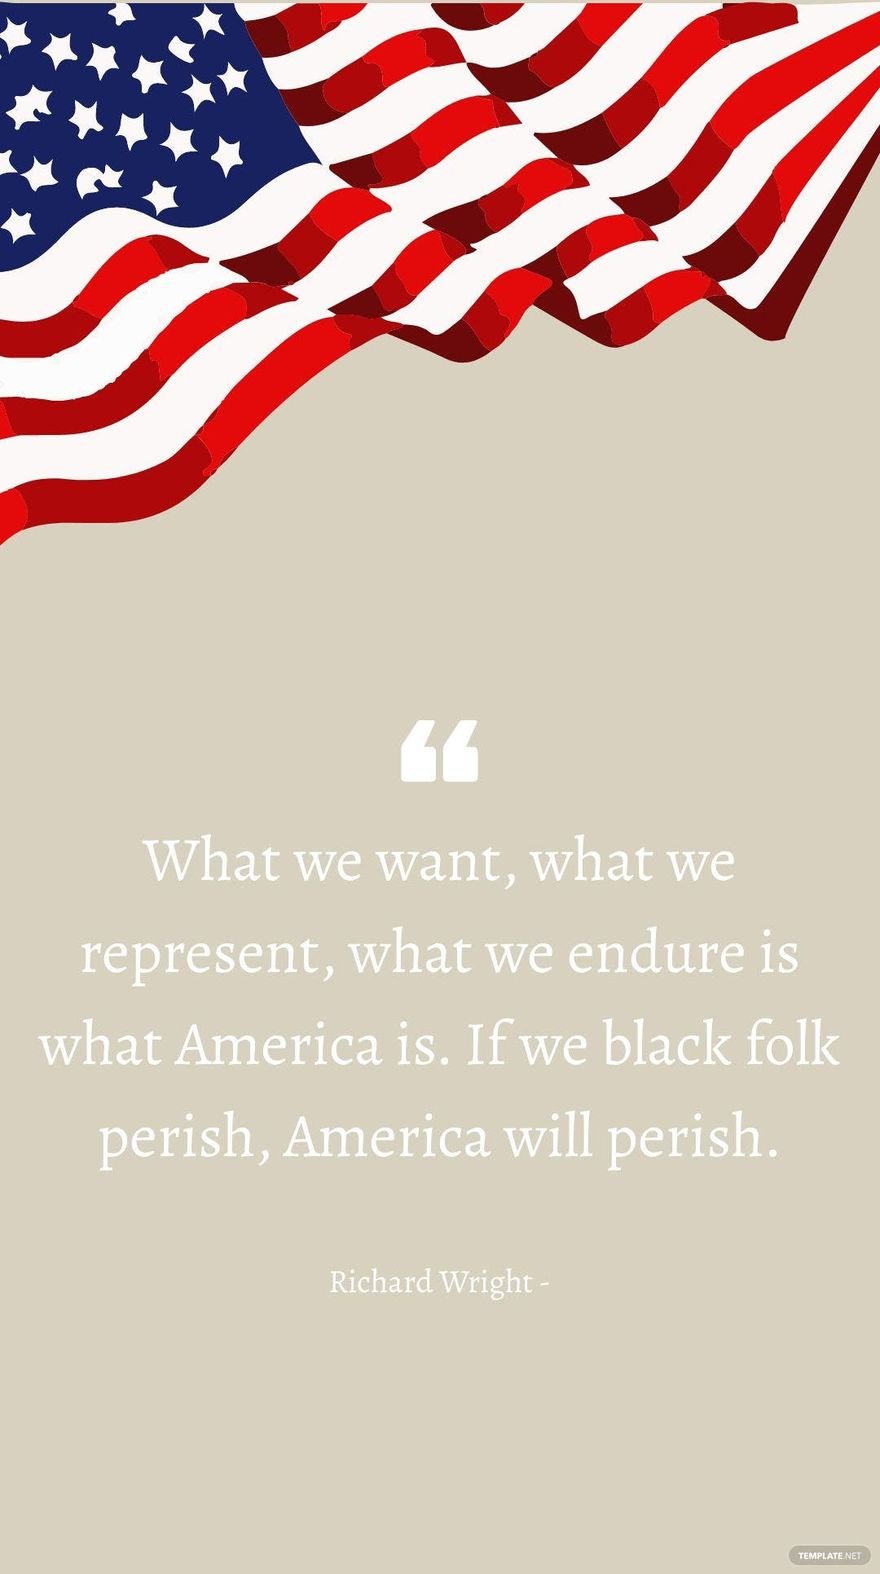 Richard Wright - What we want, what we represent, what we endure is what America is. If we black folk perish, America will perish.